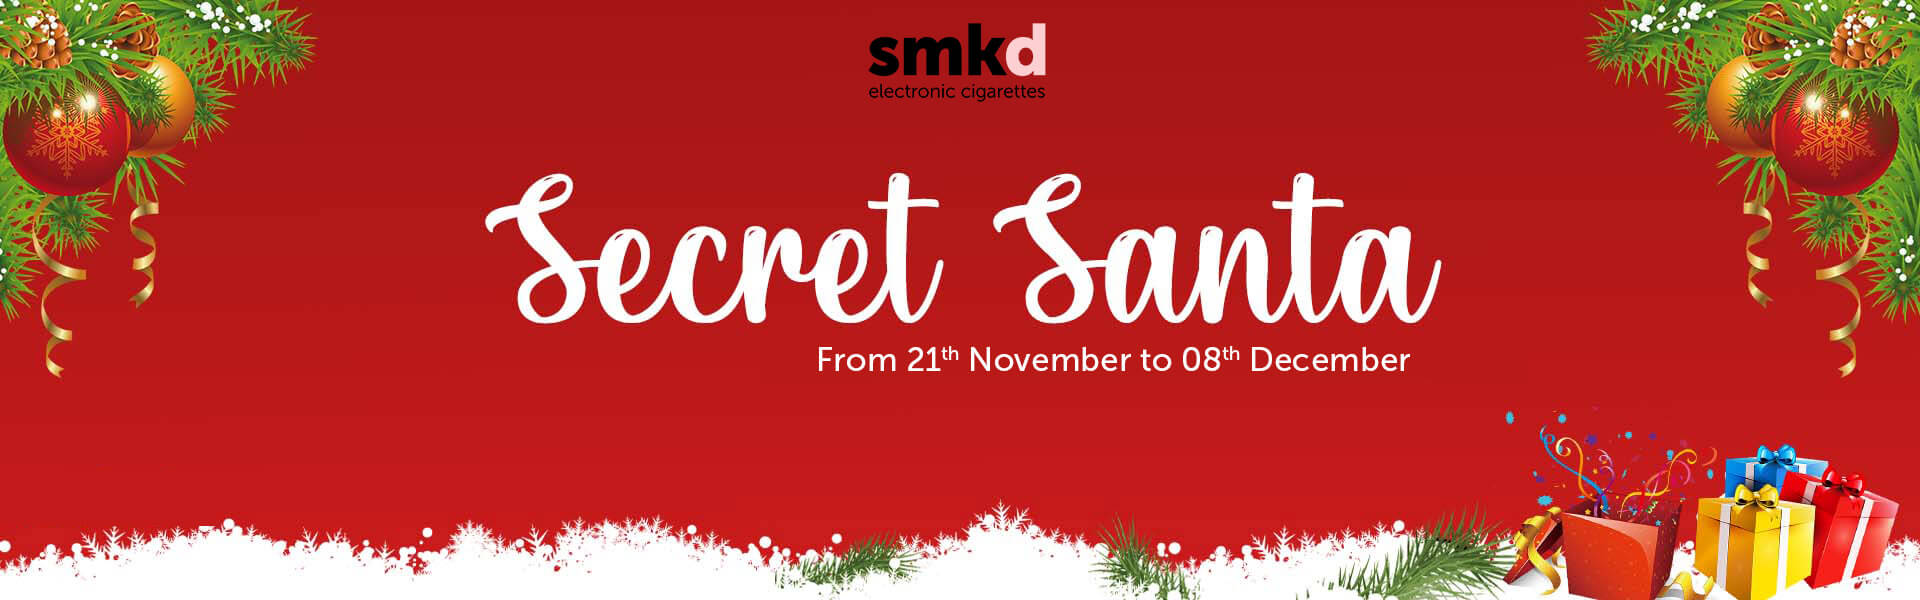 SMKD Vape Shop Secret Santa